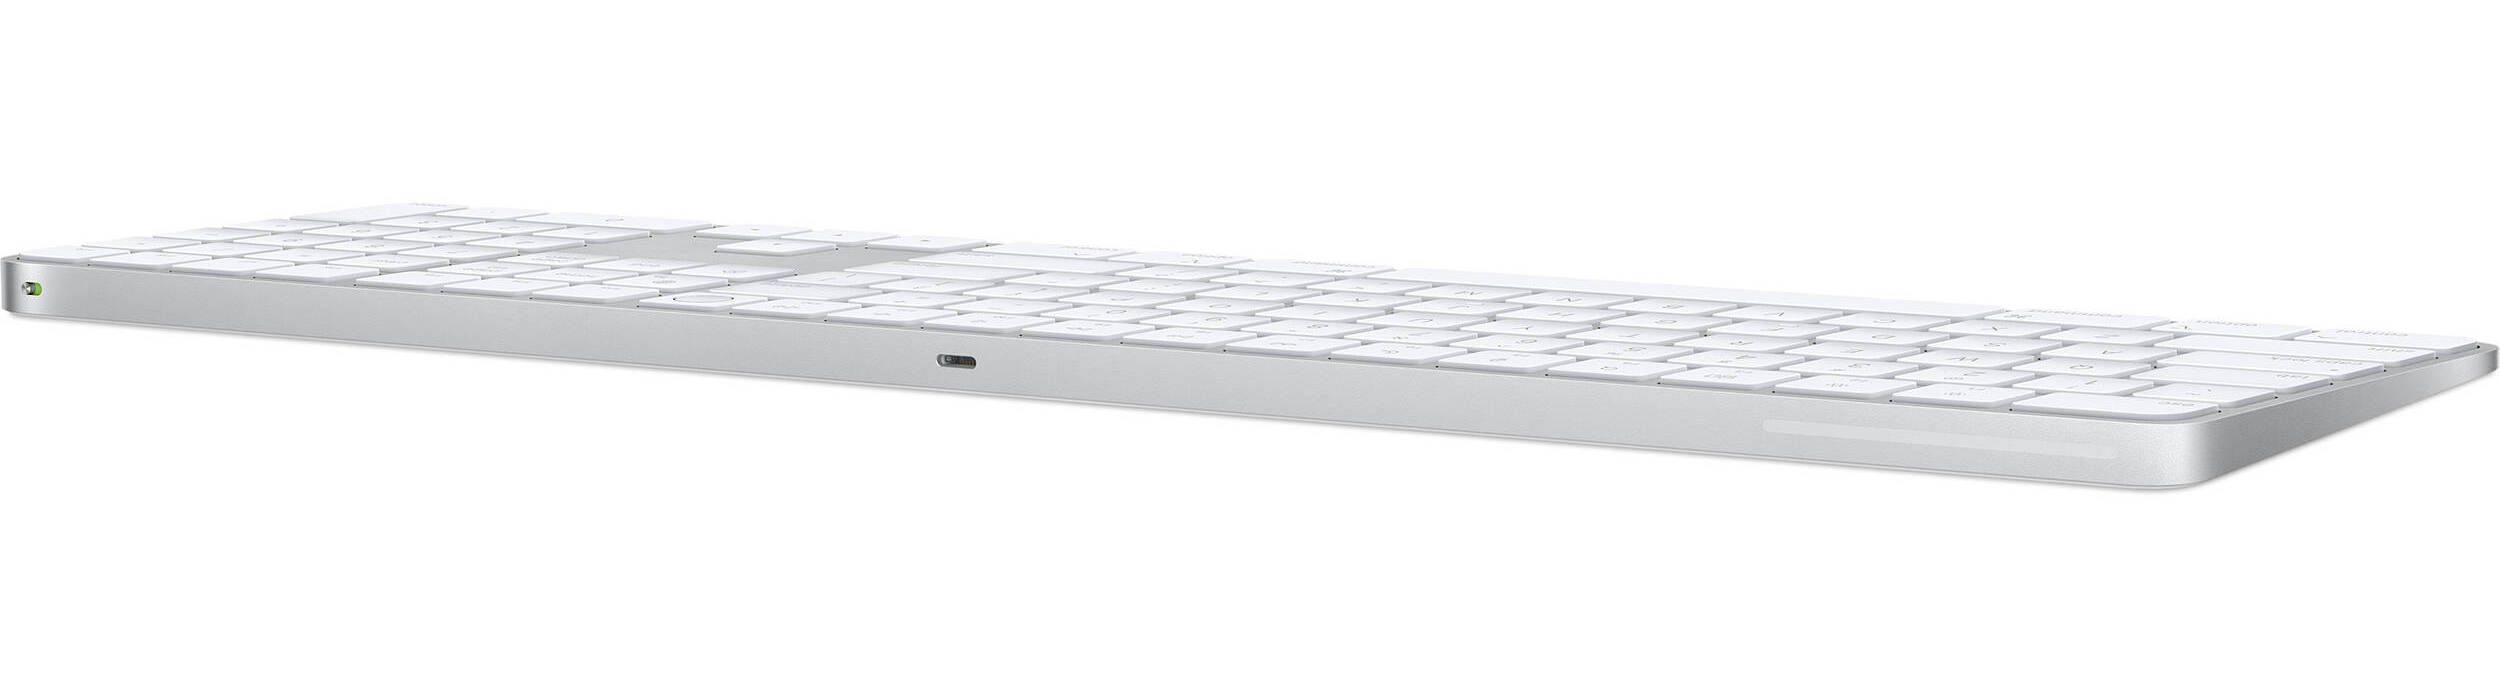 Клавиатура Apple Magic Keyboard с Touch ID и цифровой панелью, серебристый+белый— фото №2